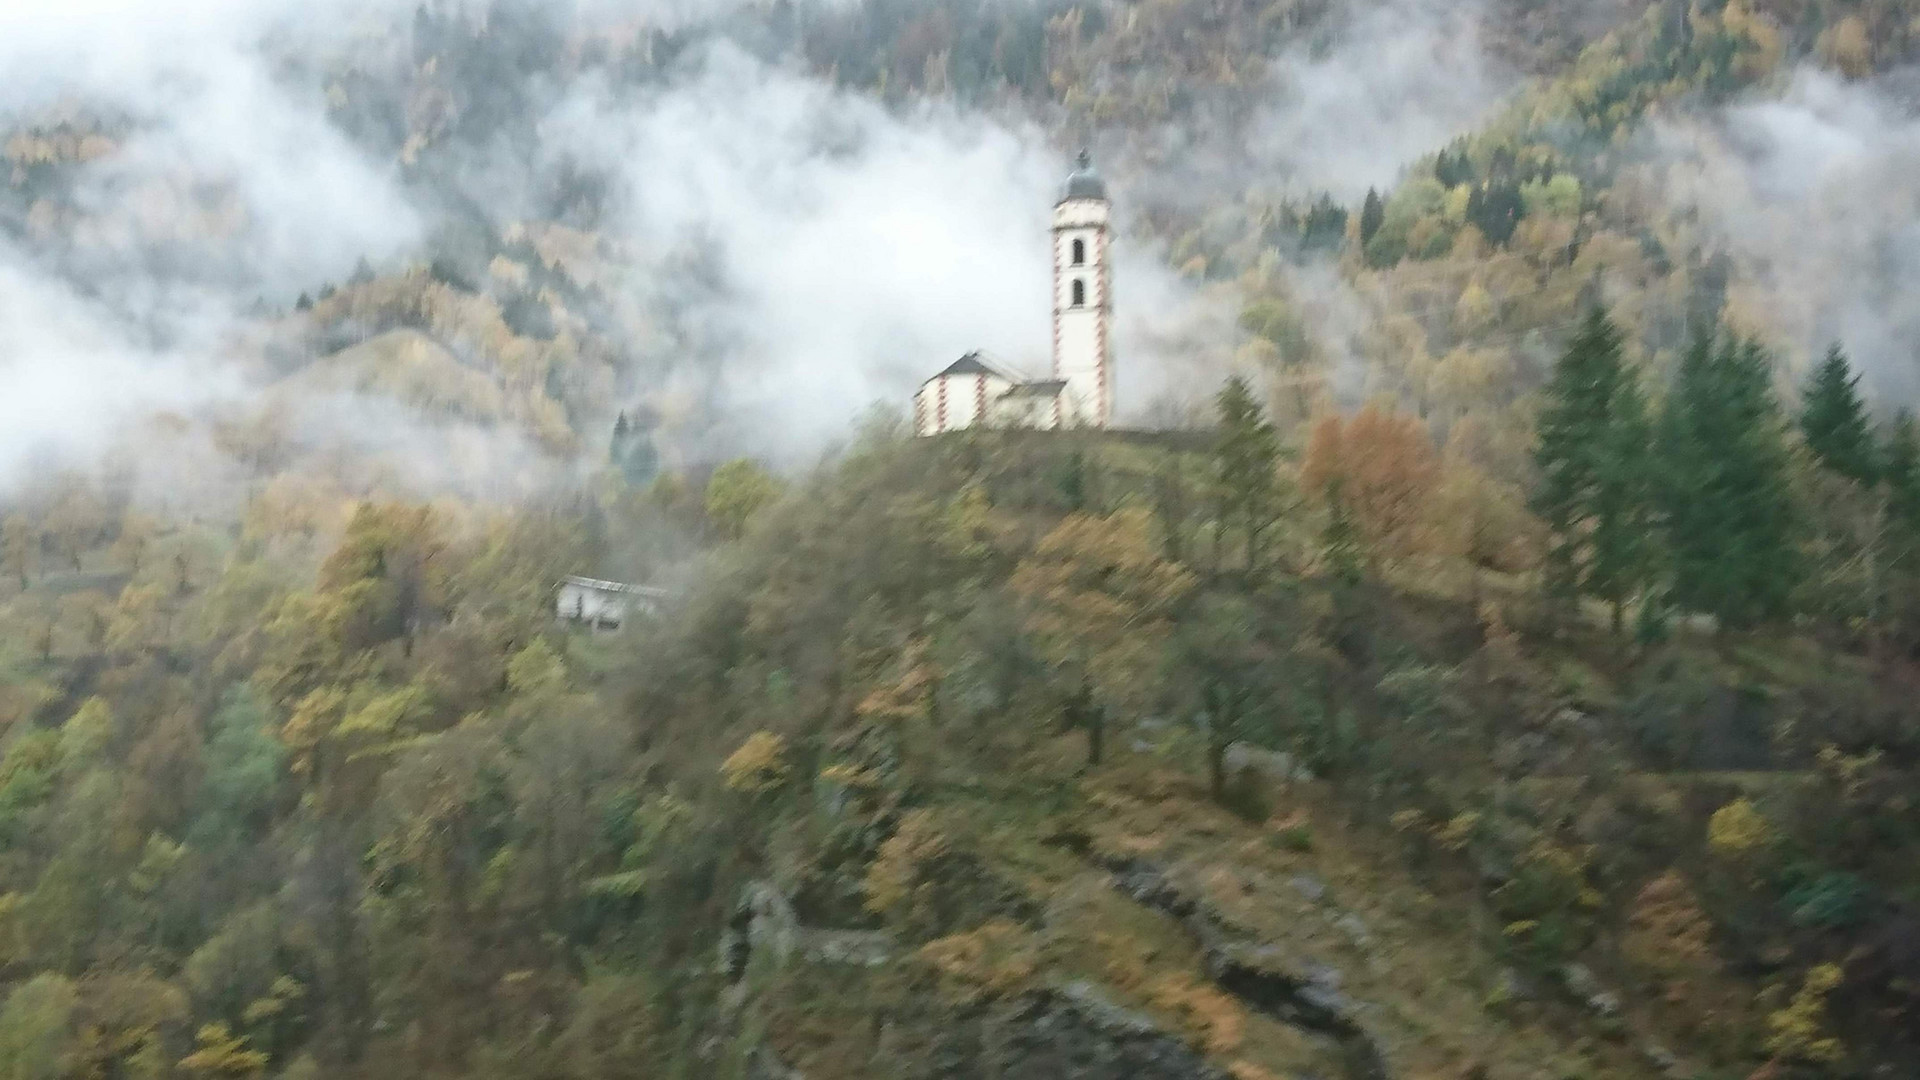 Bergkirche im Nebel